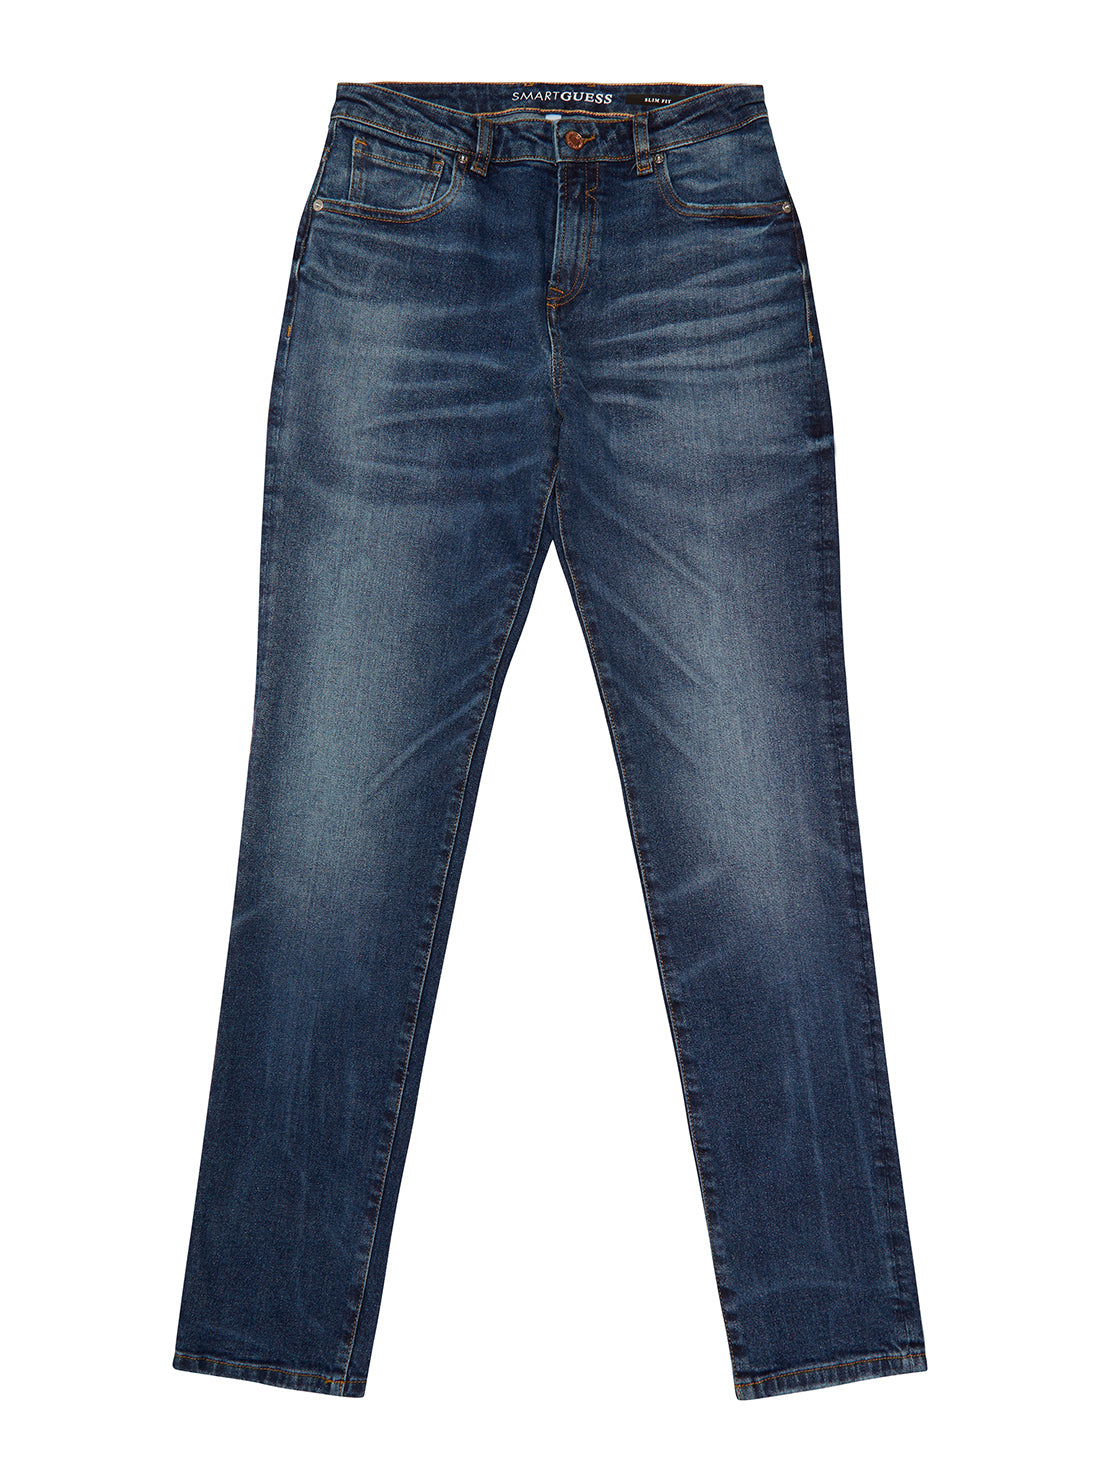 GUESS Kids Big Boy Eco Dark Blue Westland Wash Slim Denim Jeans (7-16) L1BA14D46X5 Front View